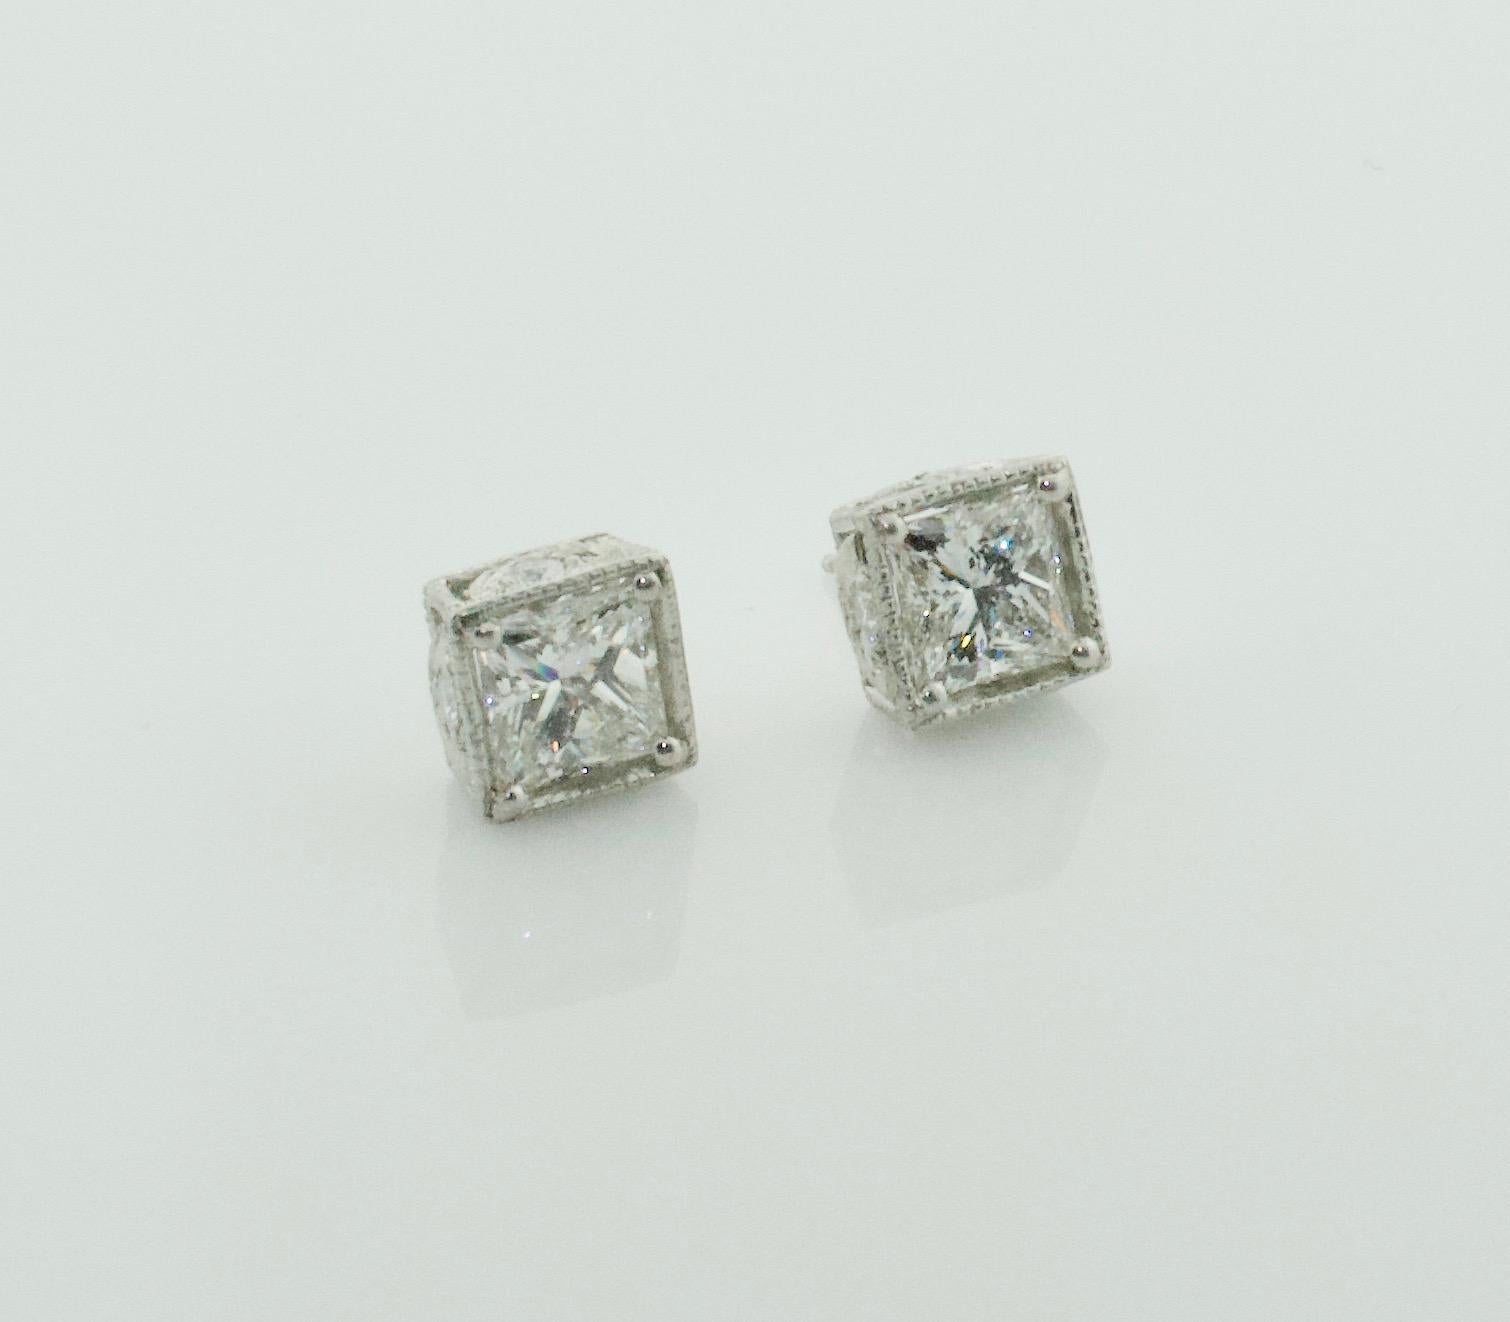 Large Princess Cut Diamond Stud Earrings in Platinum 5.10 Carat H-I SI1 GIA 5